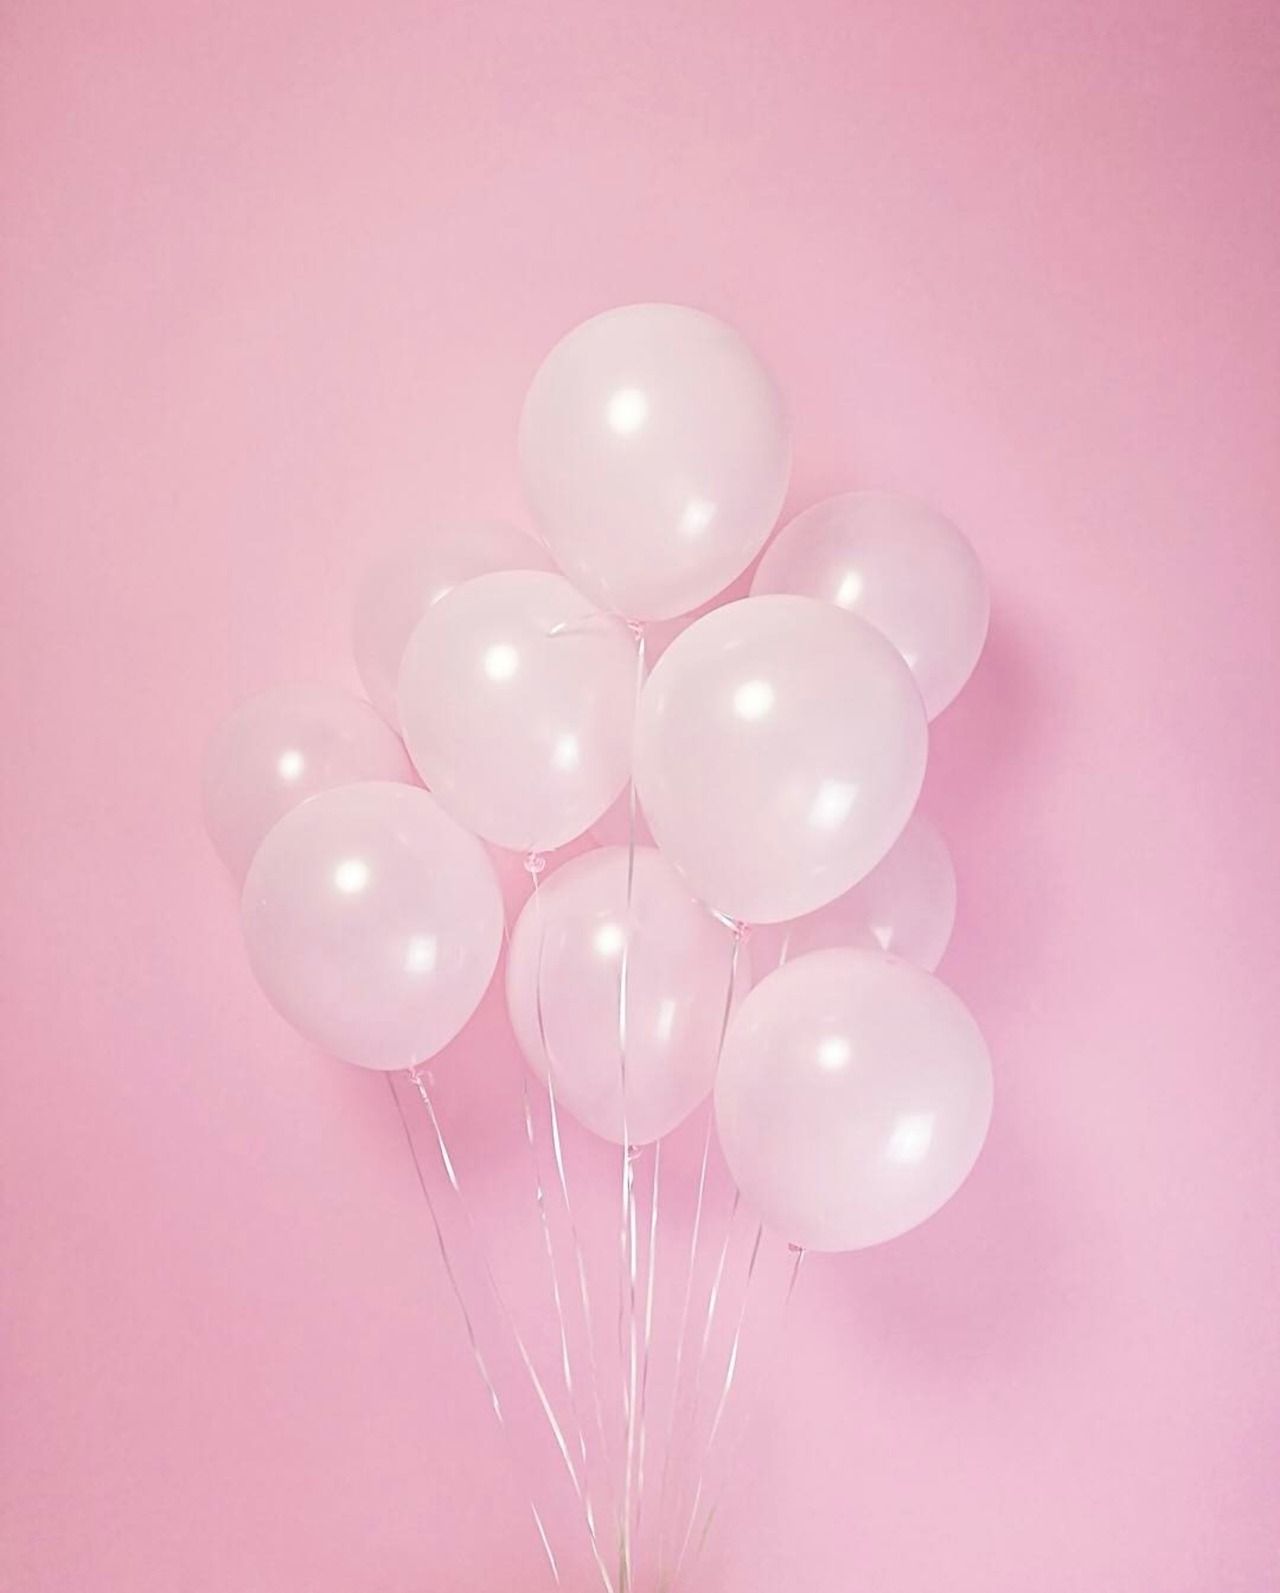 Aesthetic Pastel Pink Balloons .novocom.top